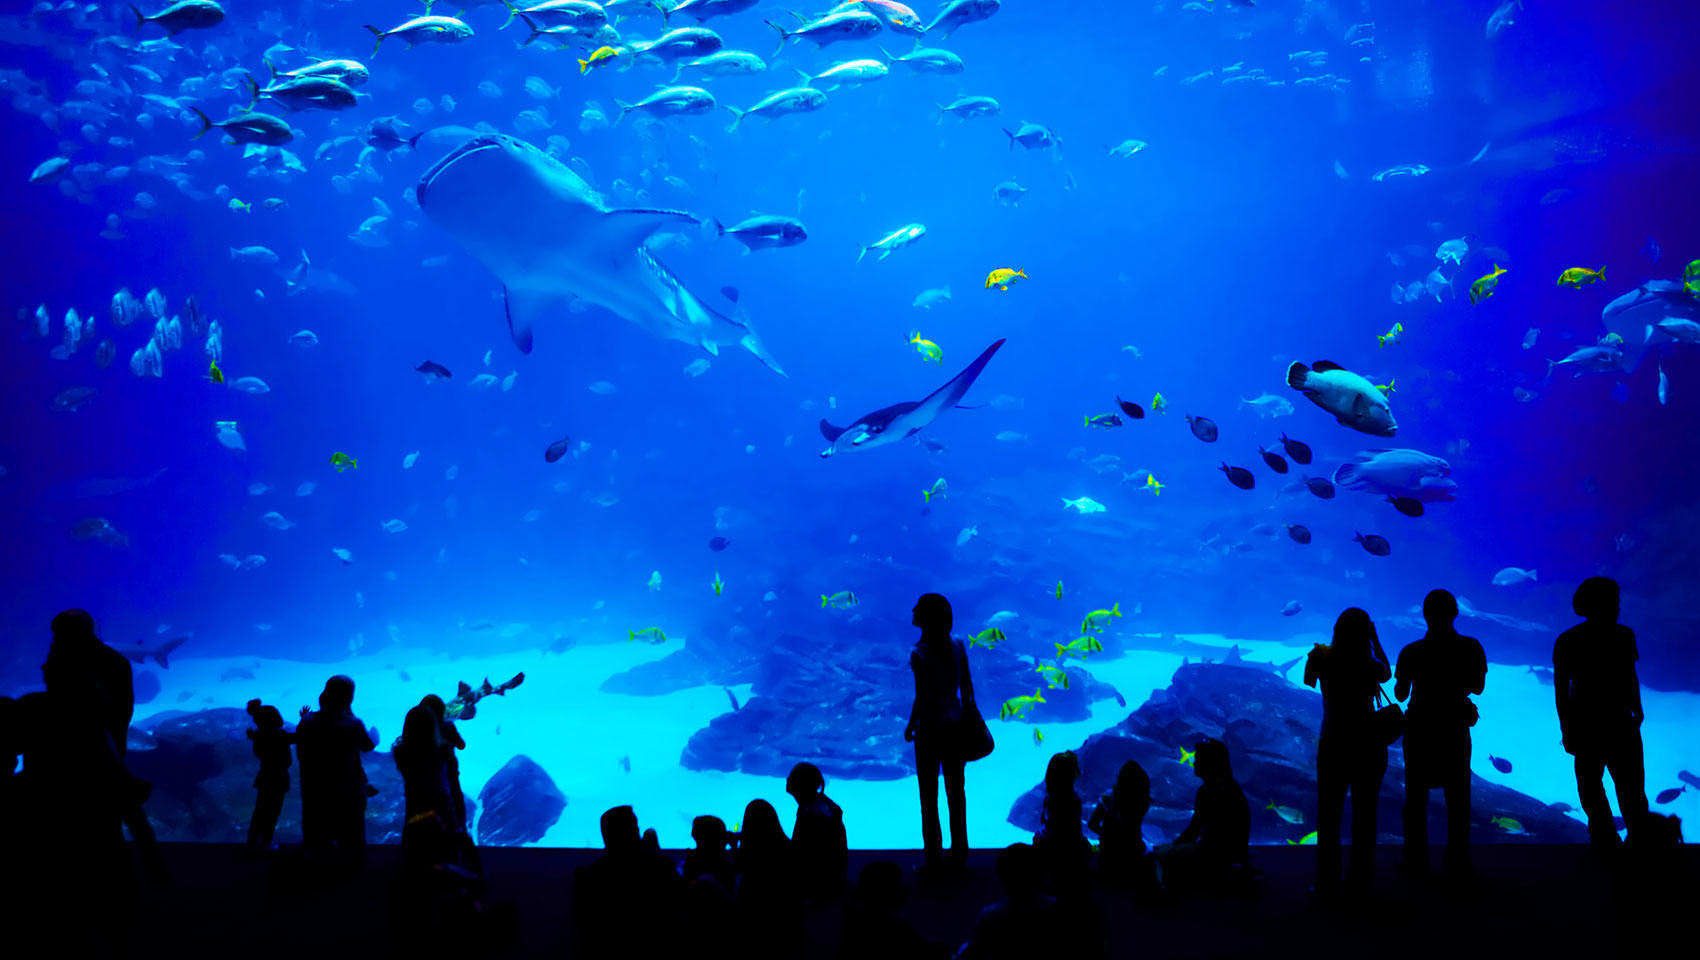 aquarium with child standing in front